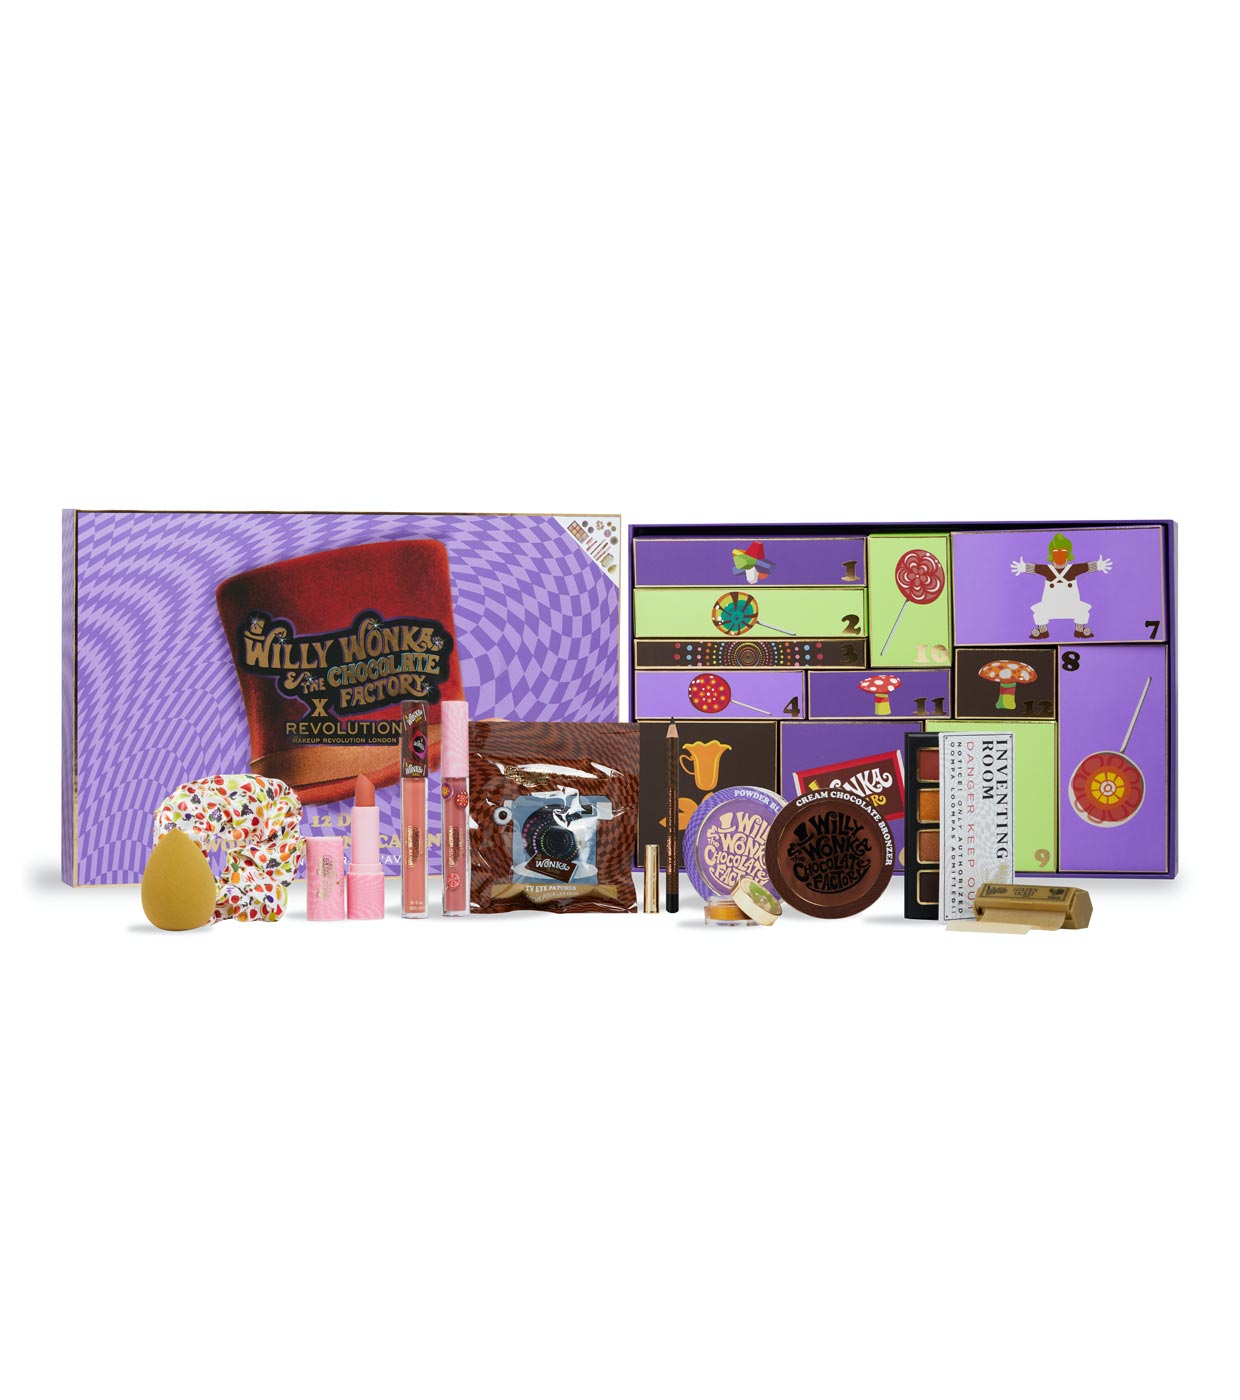 Revolution - *Willy Wonka & The chocolate factory* - Calendario de Adviento 12 días